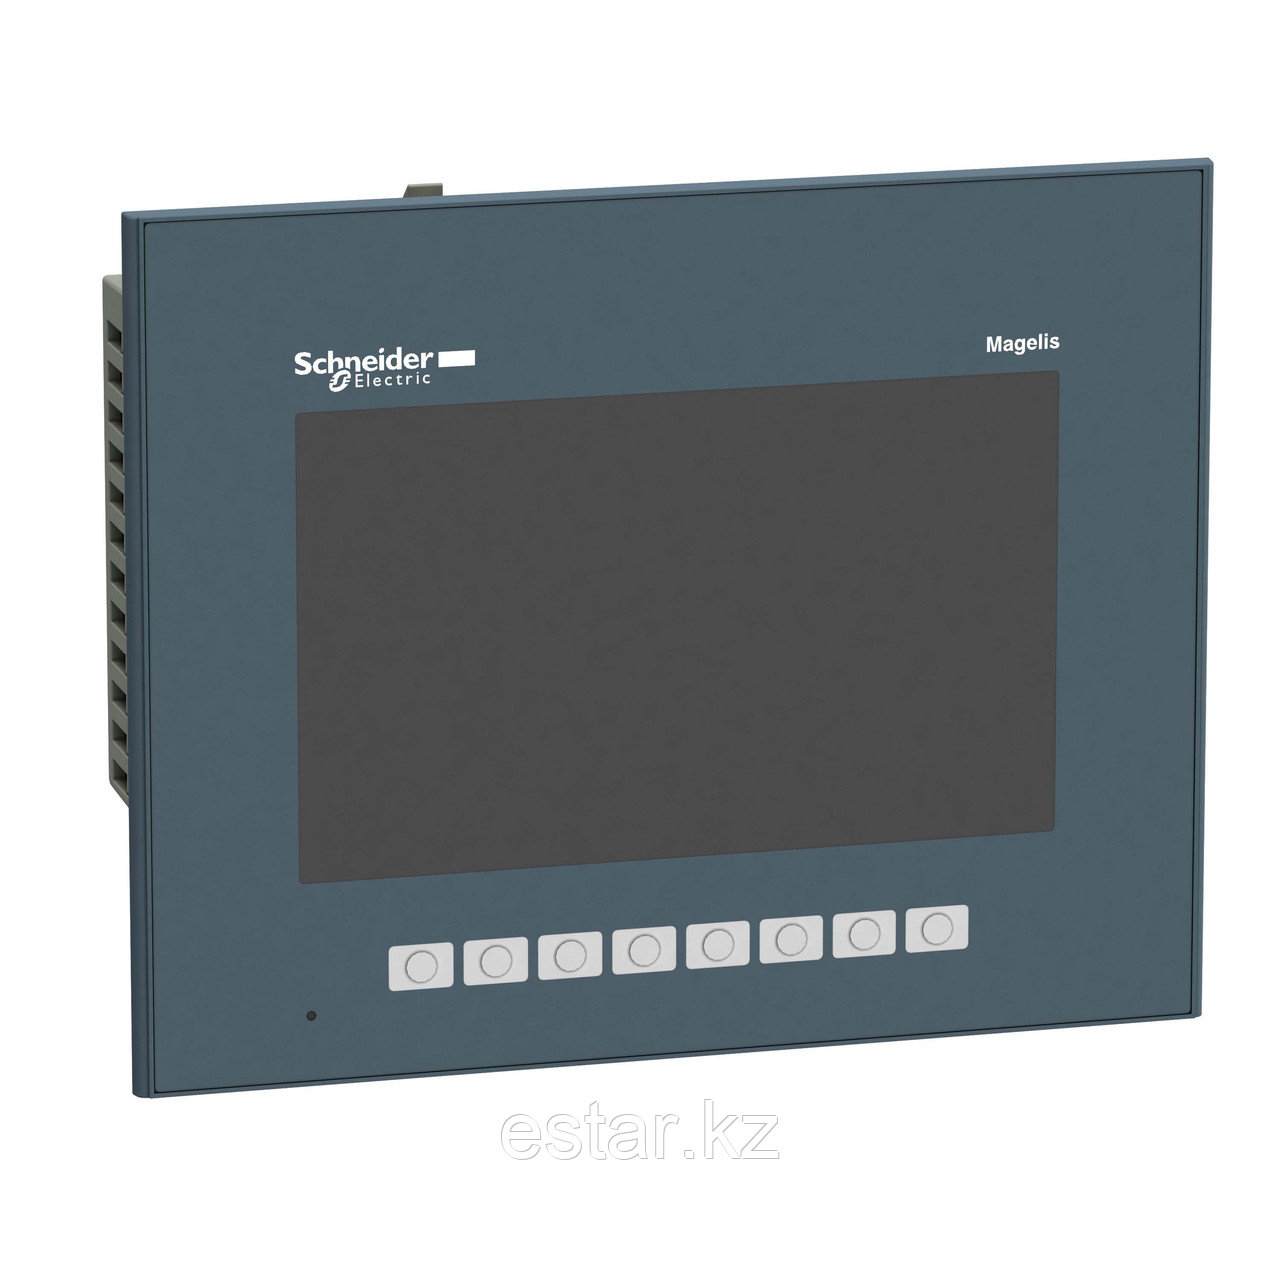 Сенс.цвет.терм. 7" 800×480 TFT,RJ45 RS232/485,SUB-D,1 Ethernet TCP/IP,96Mб/512кБ